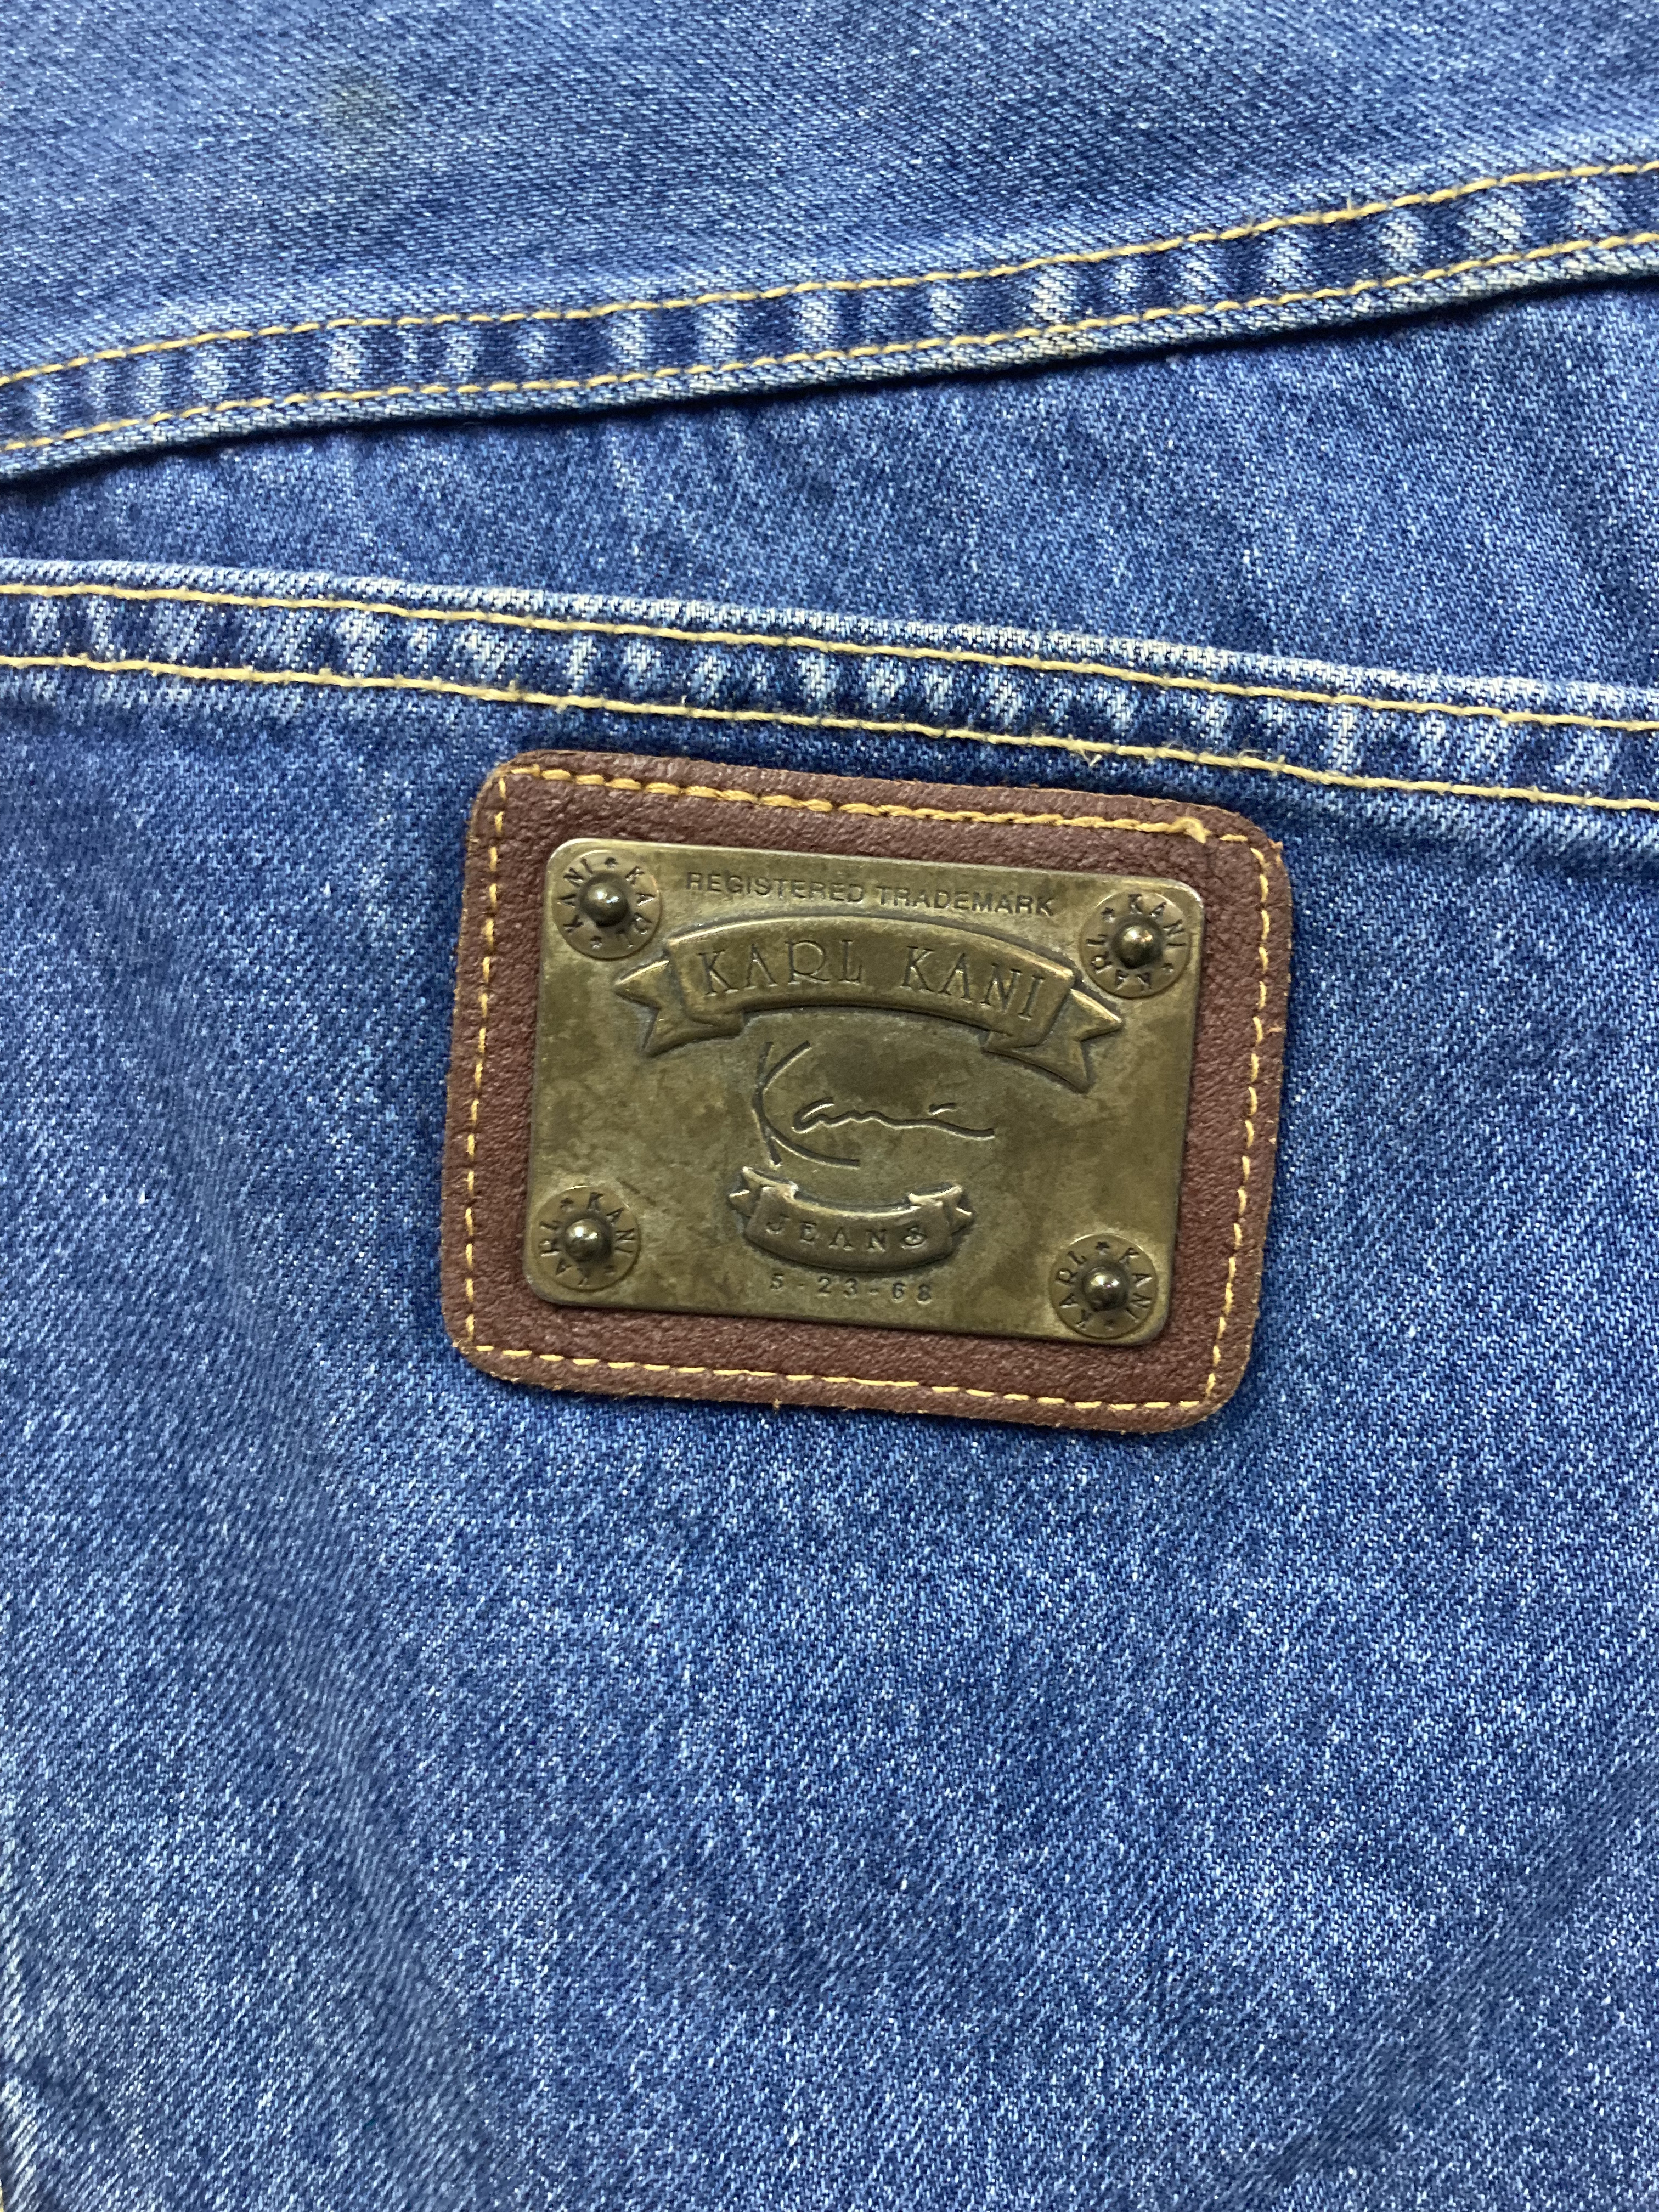 USA製Karl Kani jeans 90'sBig ブルーデニムW38 | Vintage.City